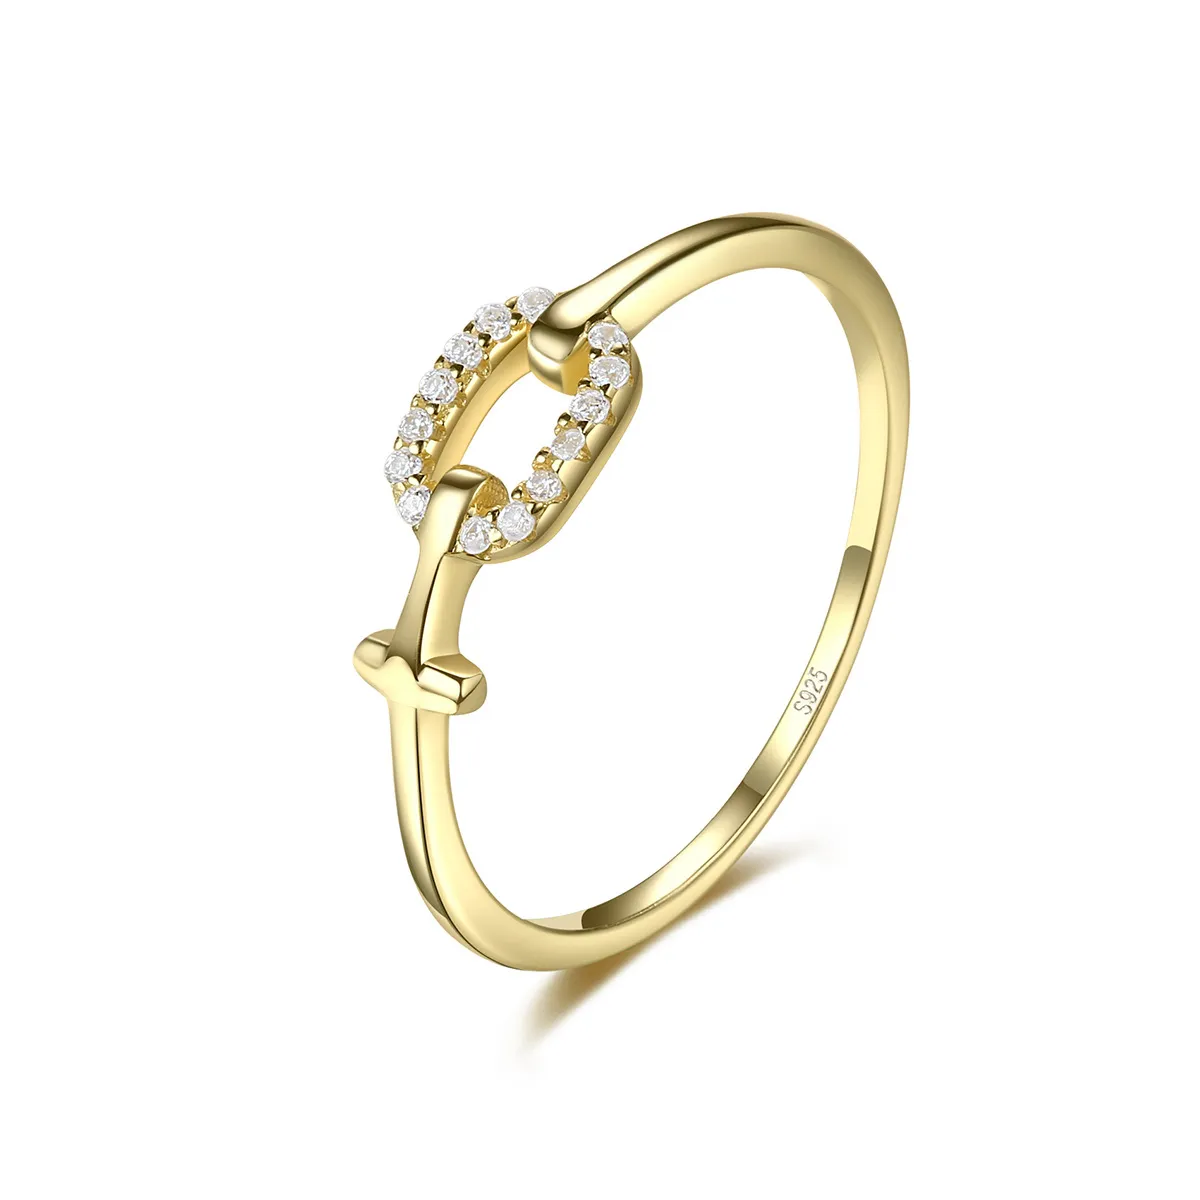 AAA Zircon Cross Ring S925 Sterling Silver Plated 18K Gold Fashion Märke Ring European och American Hot Popular Women High End Ring Jewelry Valentine's Day Gift SPC